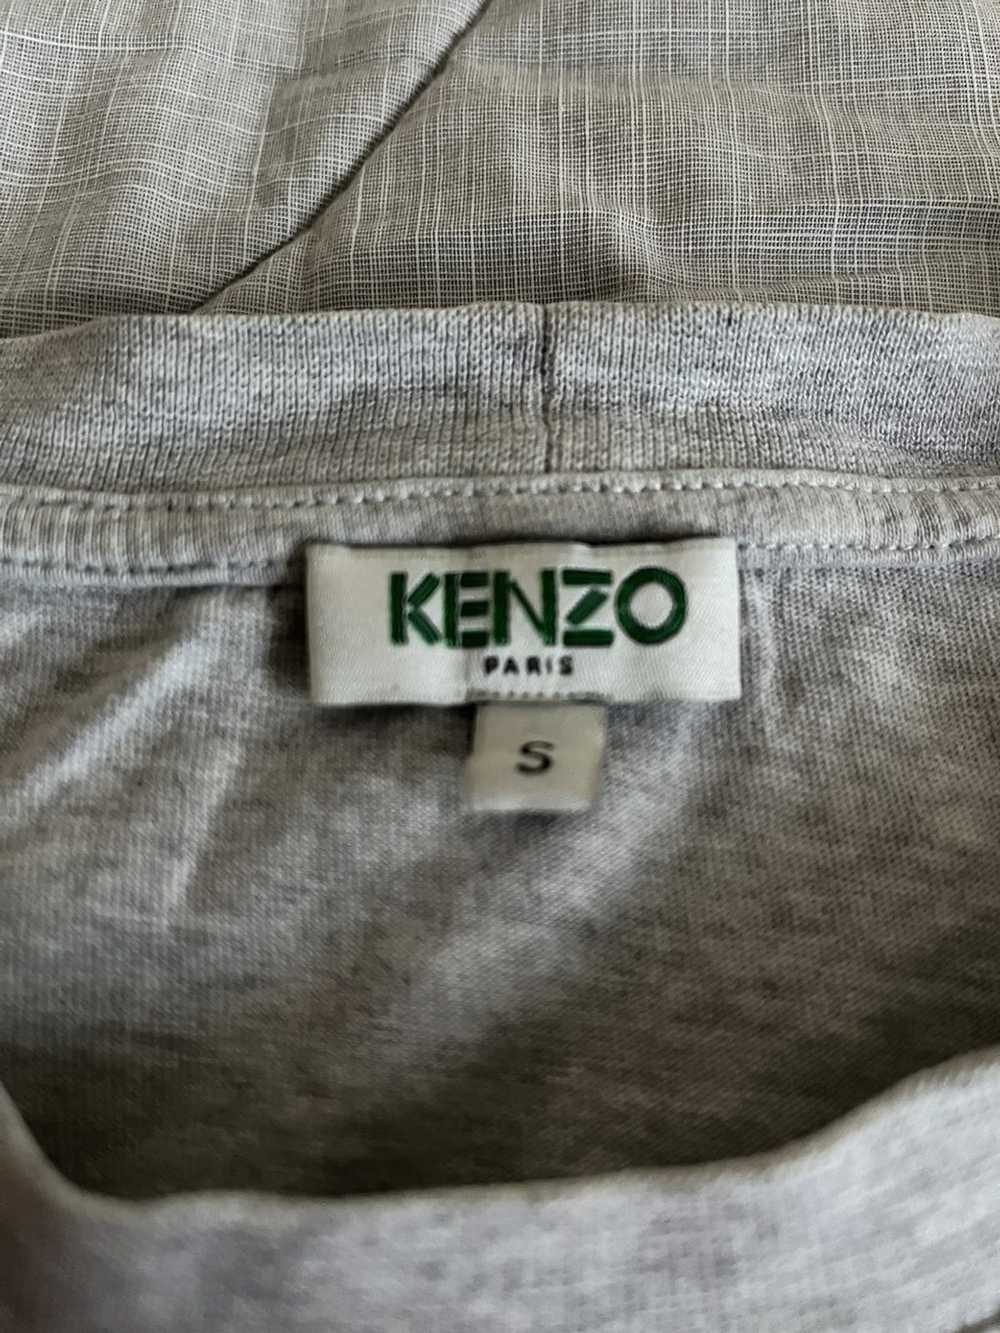 Kenzo Kenzo Paris Iconic Tiger Tee T shirt Gray S… - image 3